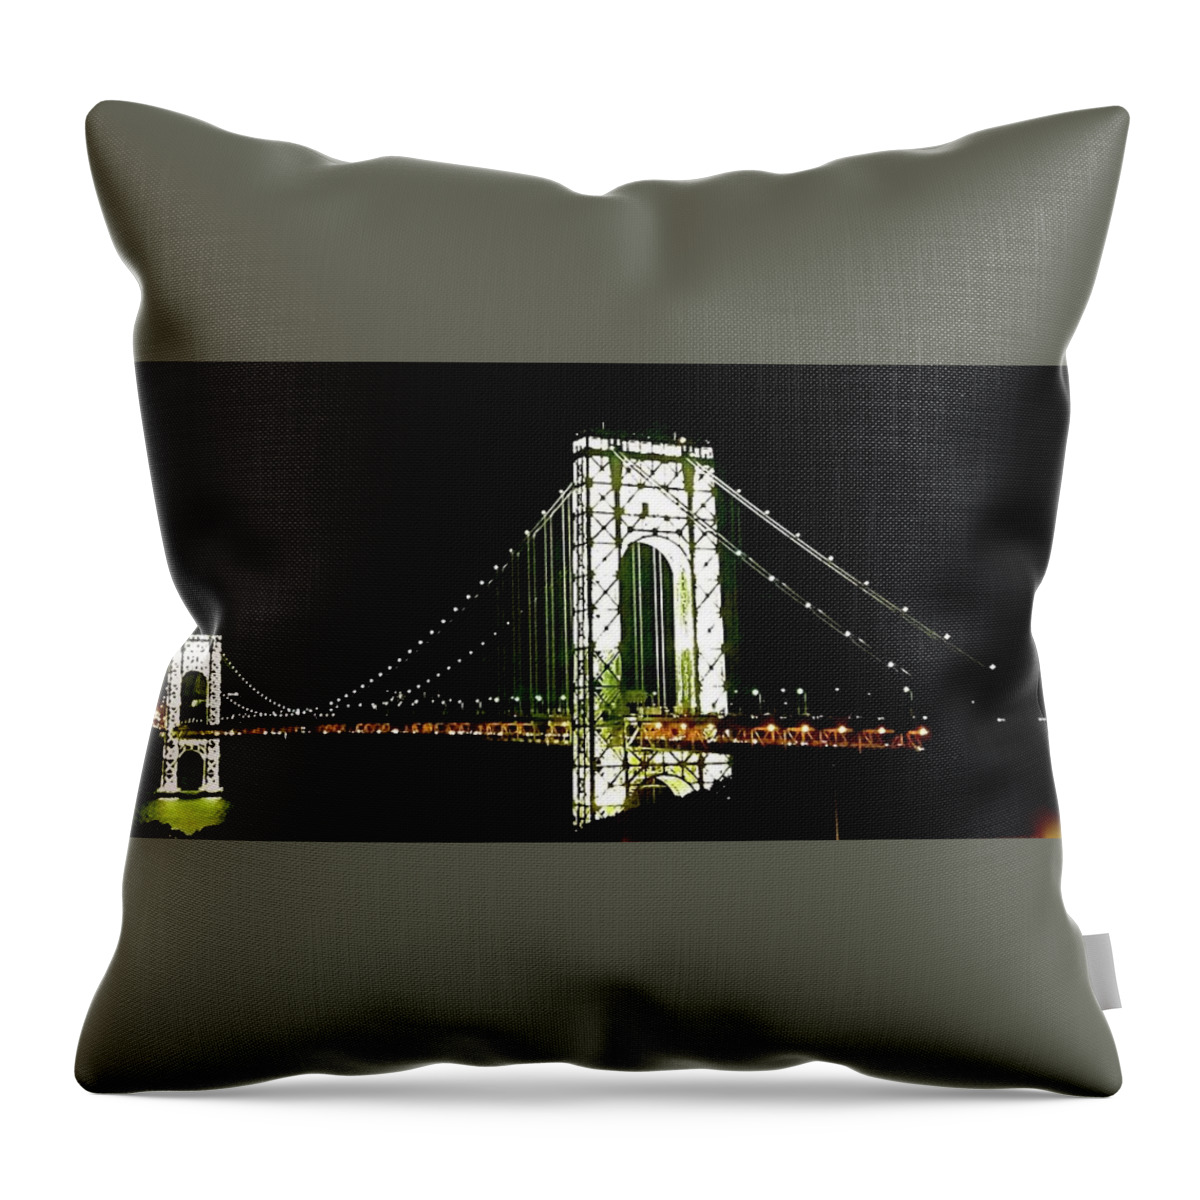  New York Skyline Throw Pillow featuring the photograph Lights at George Washington Bridge by Ydania Ogando